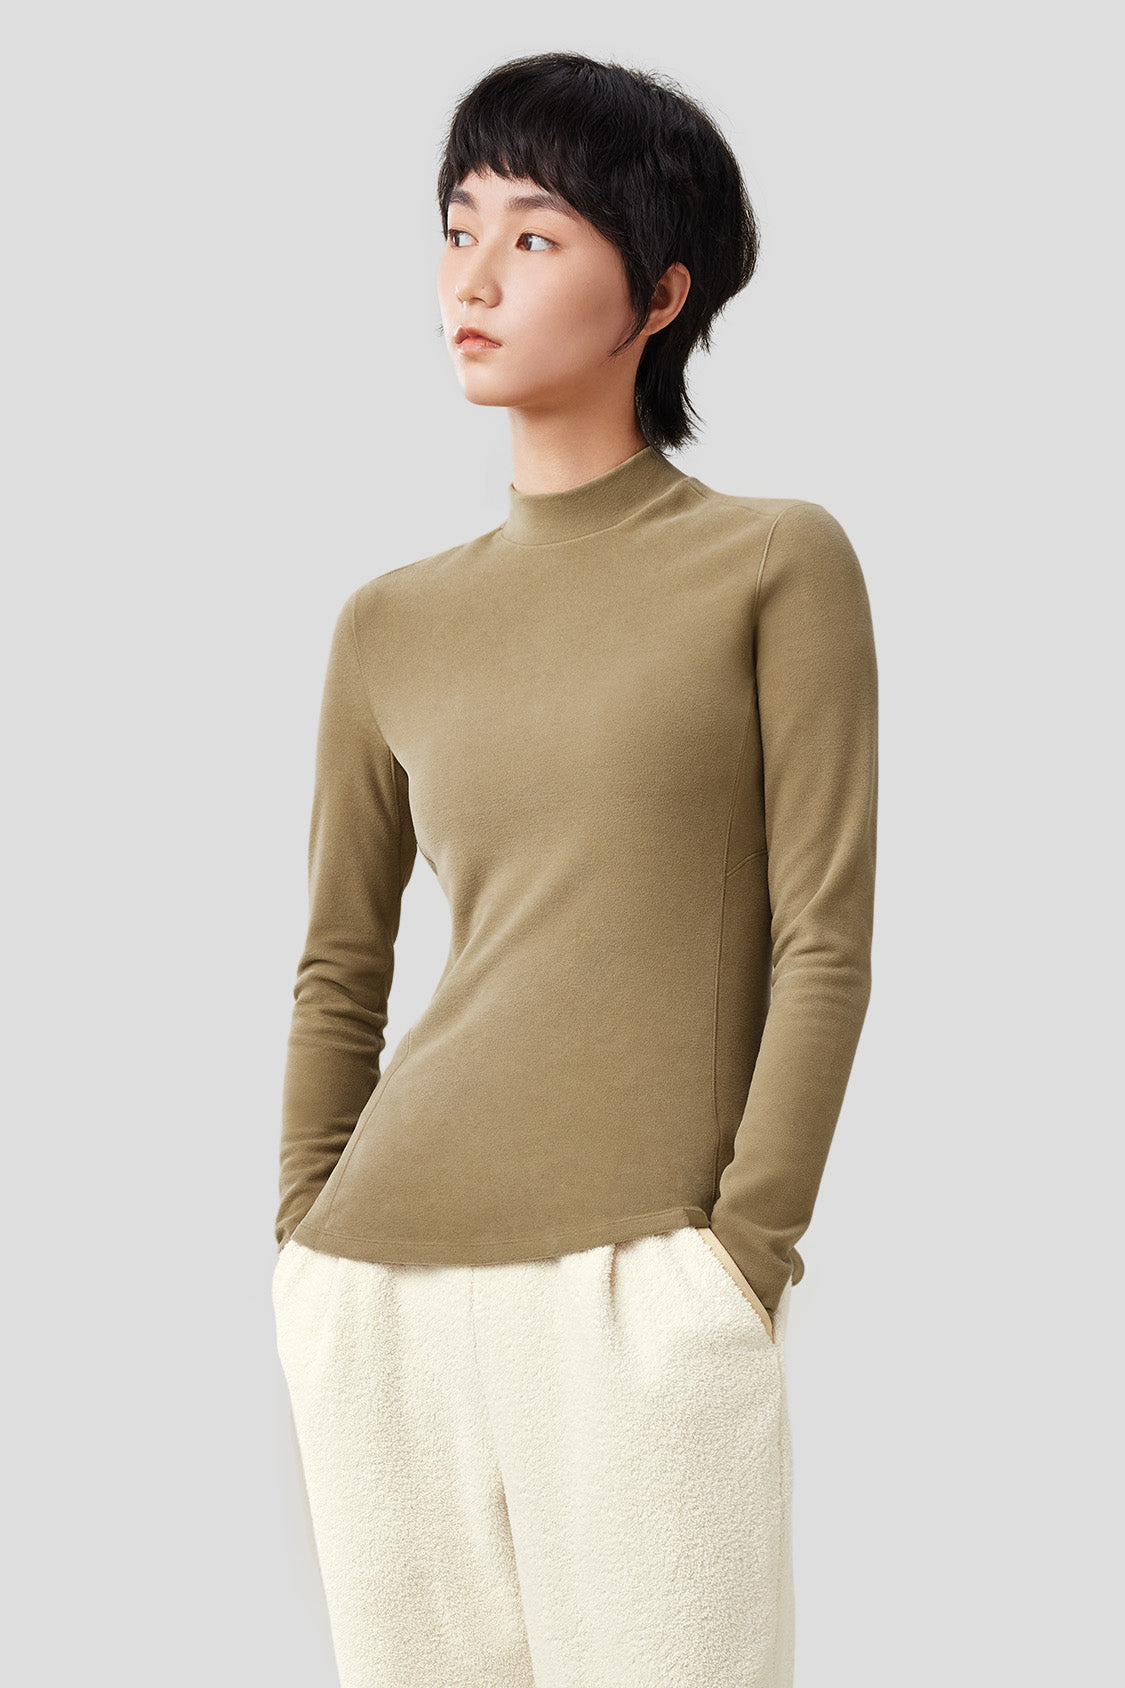 SSLR-Thermal-Shirts for-Women-Turtleneck Long Sleeve Tops Fleece